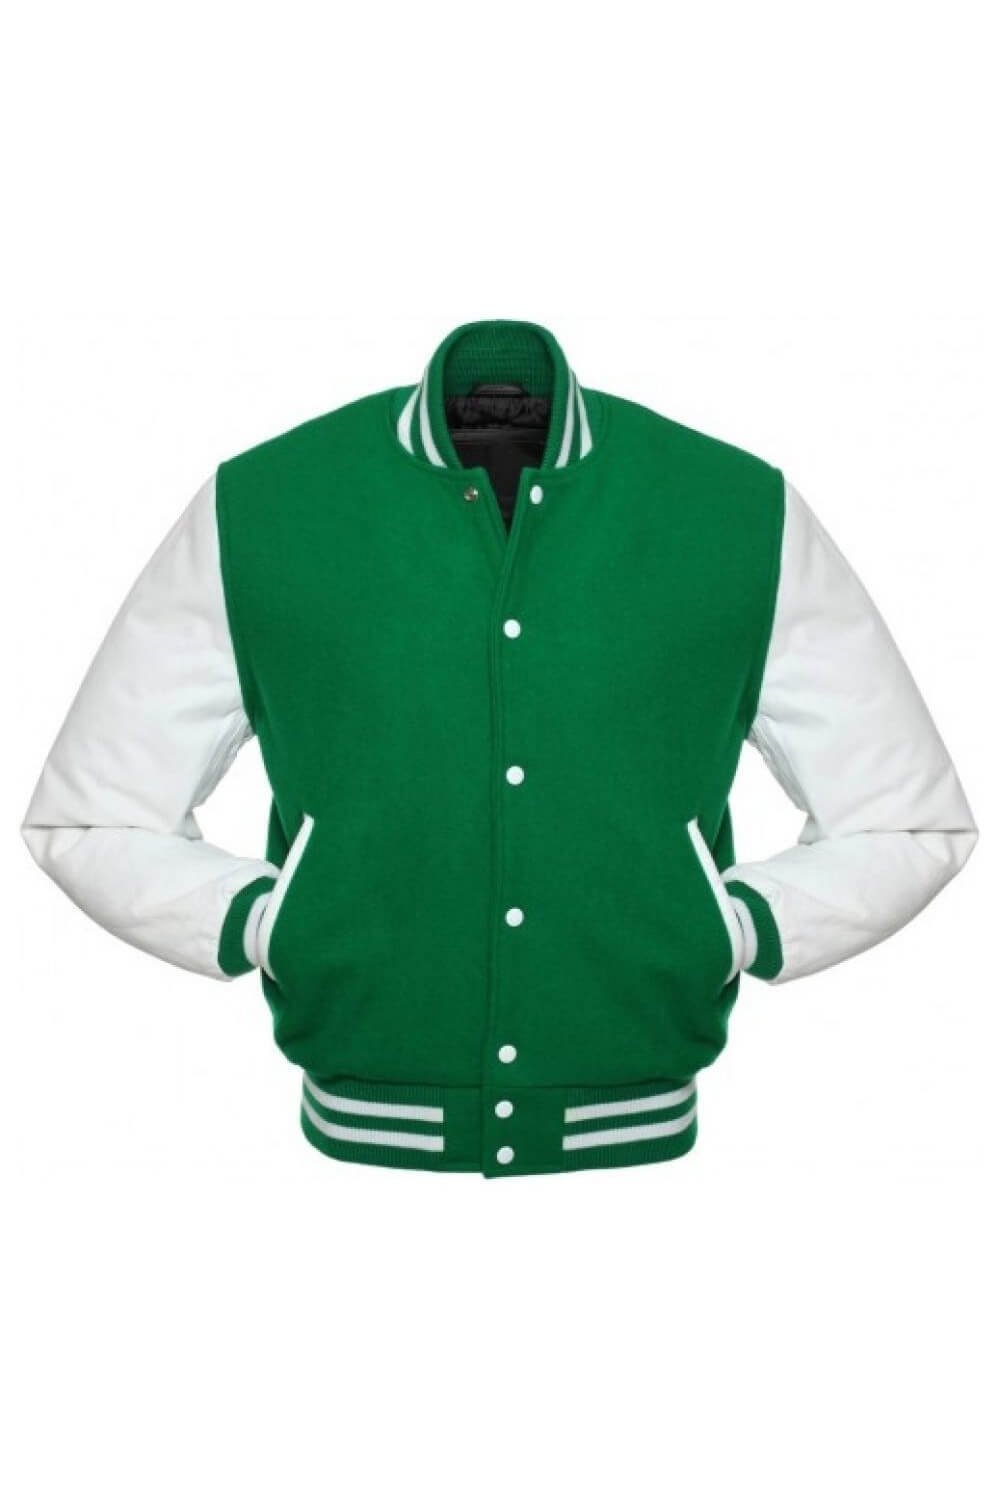 AWDis Hoods Varsity Letterman jacket Kelly Green / White 2XL